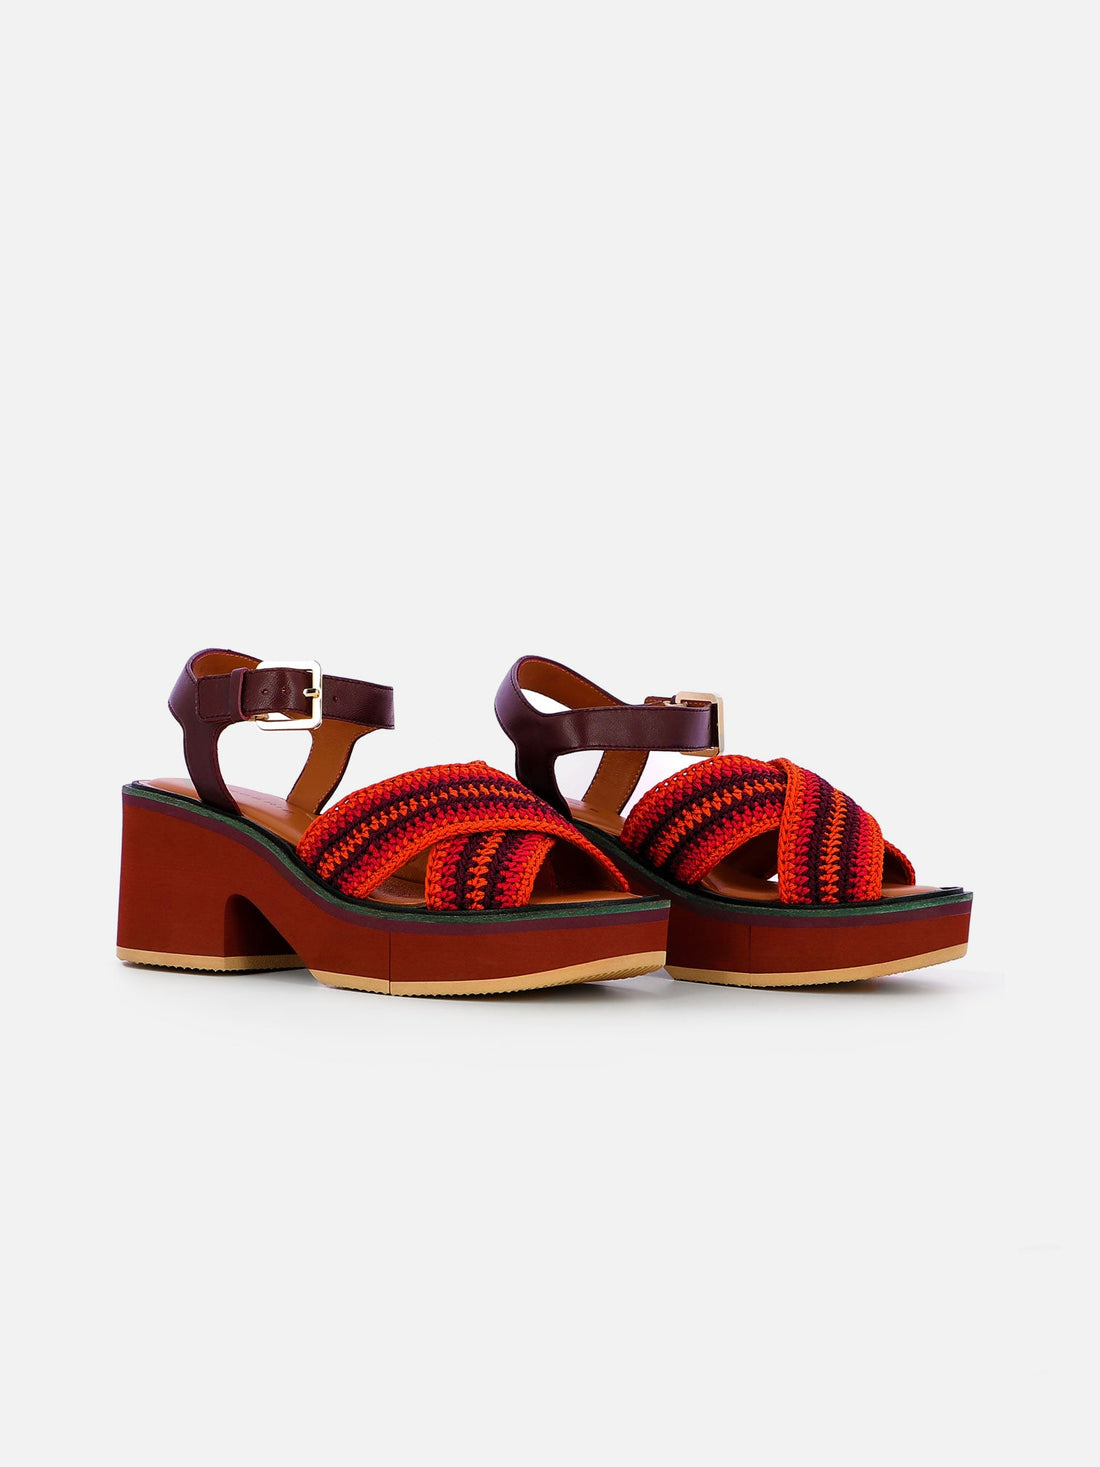 SANDALS - CARYA sandals, crochet red - 3606063969260 - Clergerie Paris - Europe